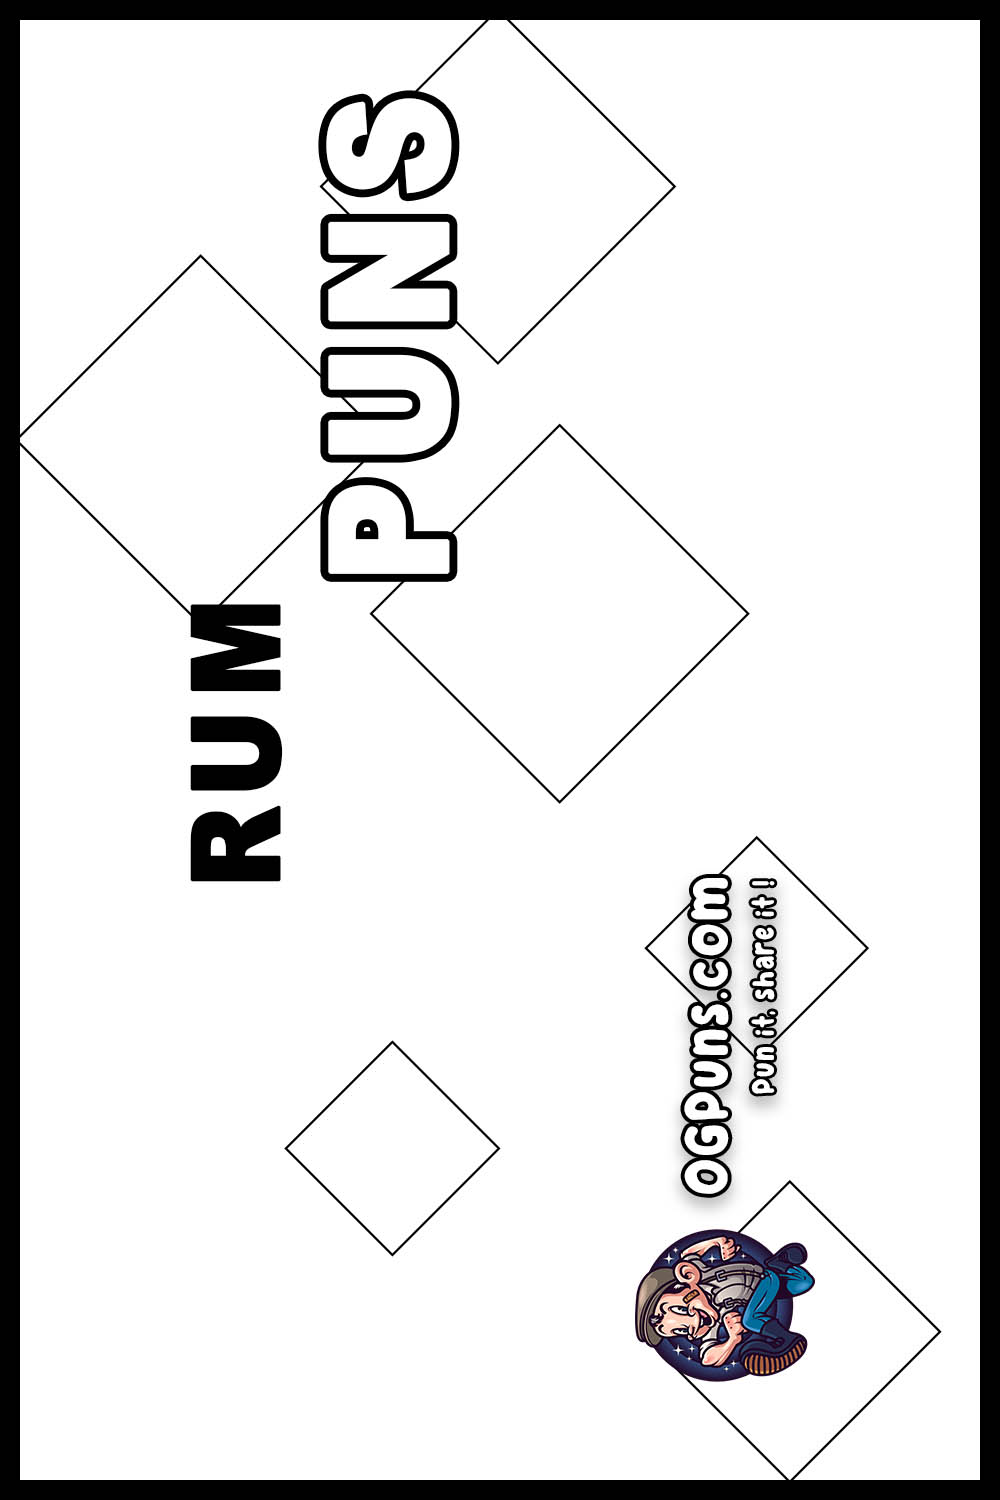 Rum puns Pinterest Image